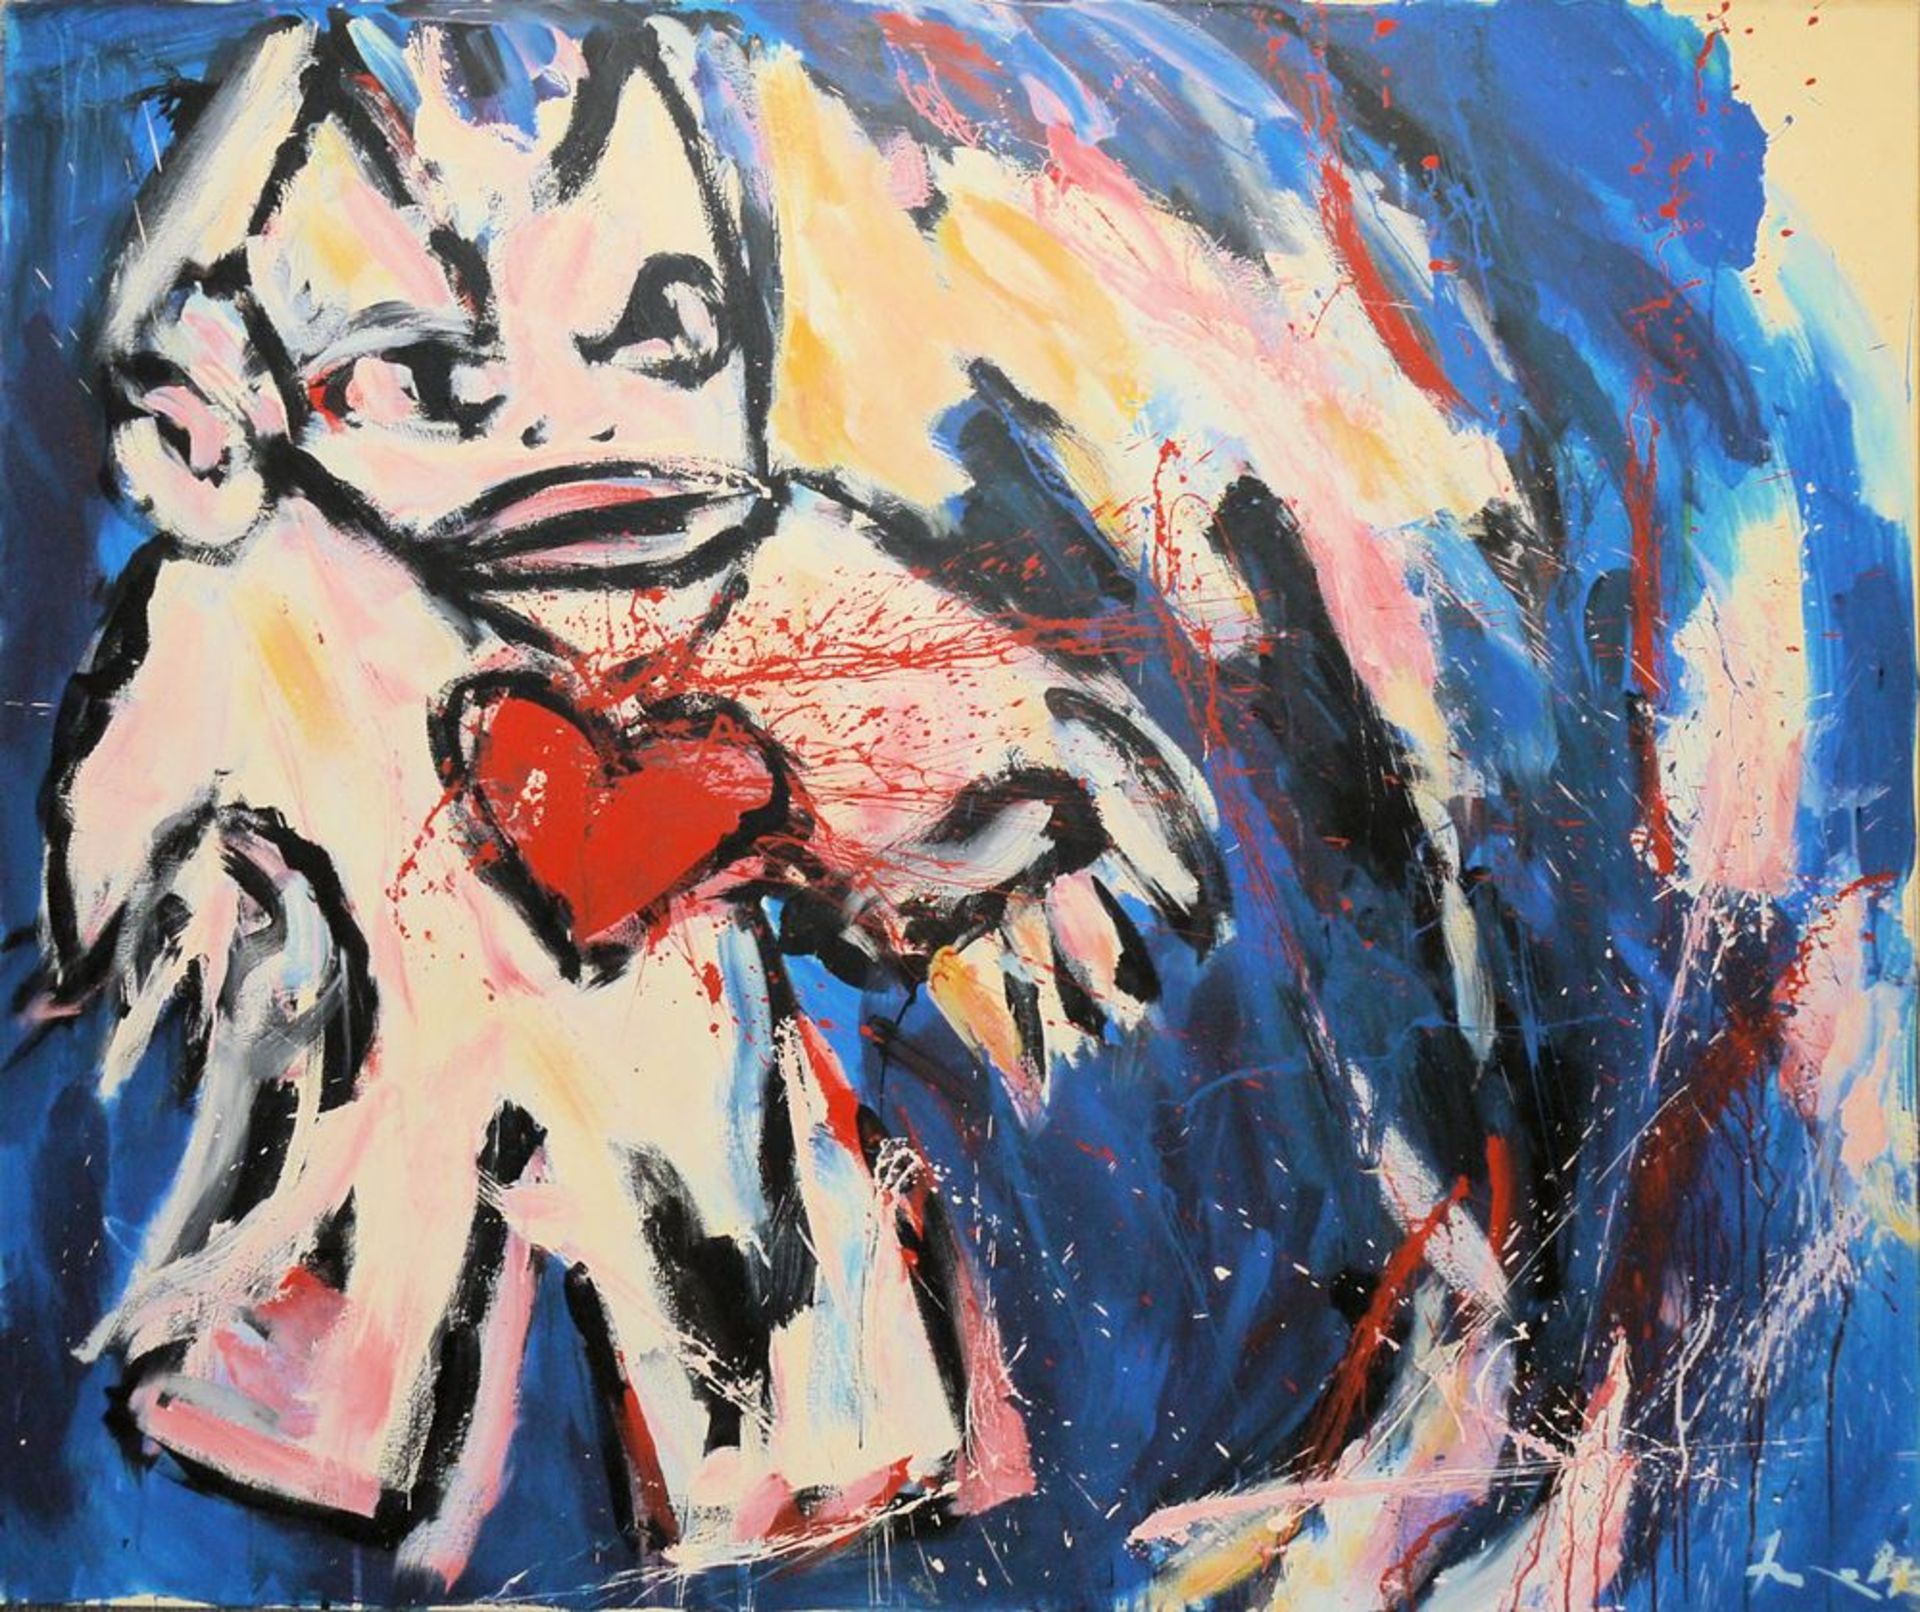 Klaus Fresenius, "Enfant terrible", großformatiges Gemälde von 1987, signiert, o. Rahmen